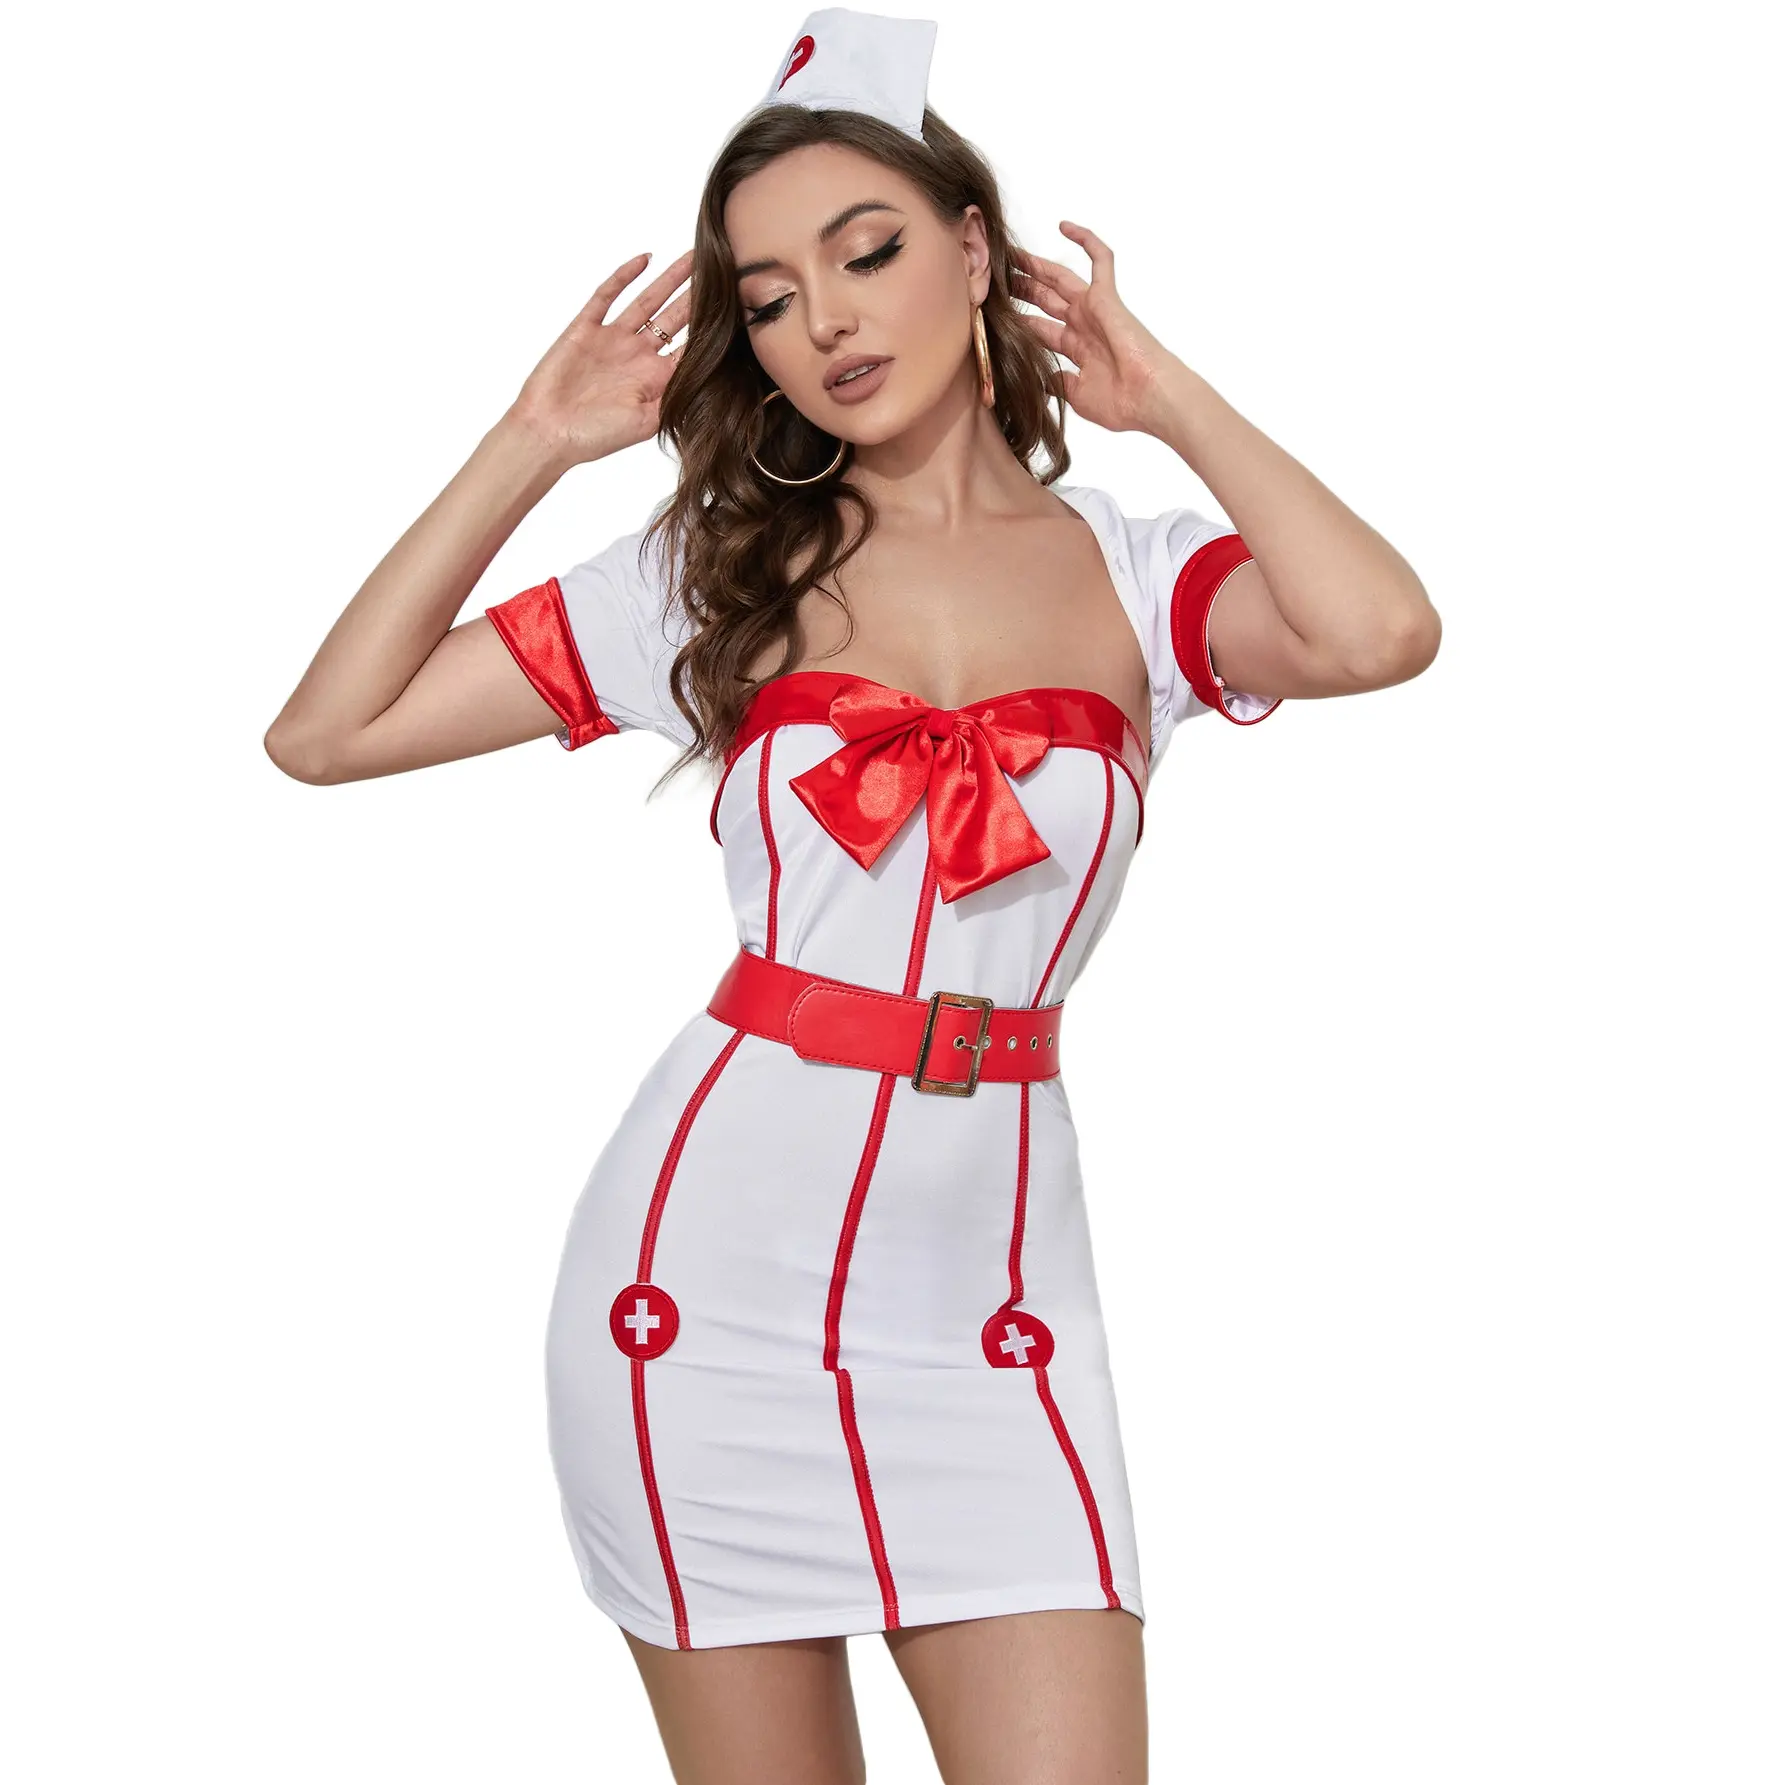 Tentazione uniforme abiti caldi discoteche infermieri costume Lingerie Sexy con guanti rossi